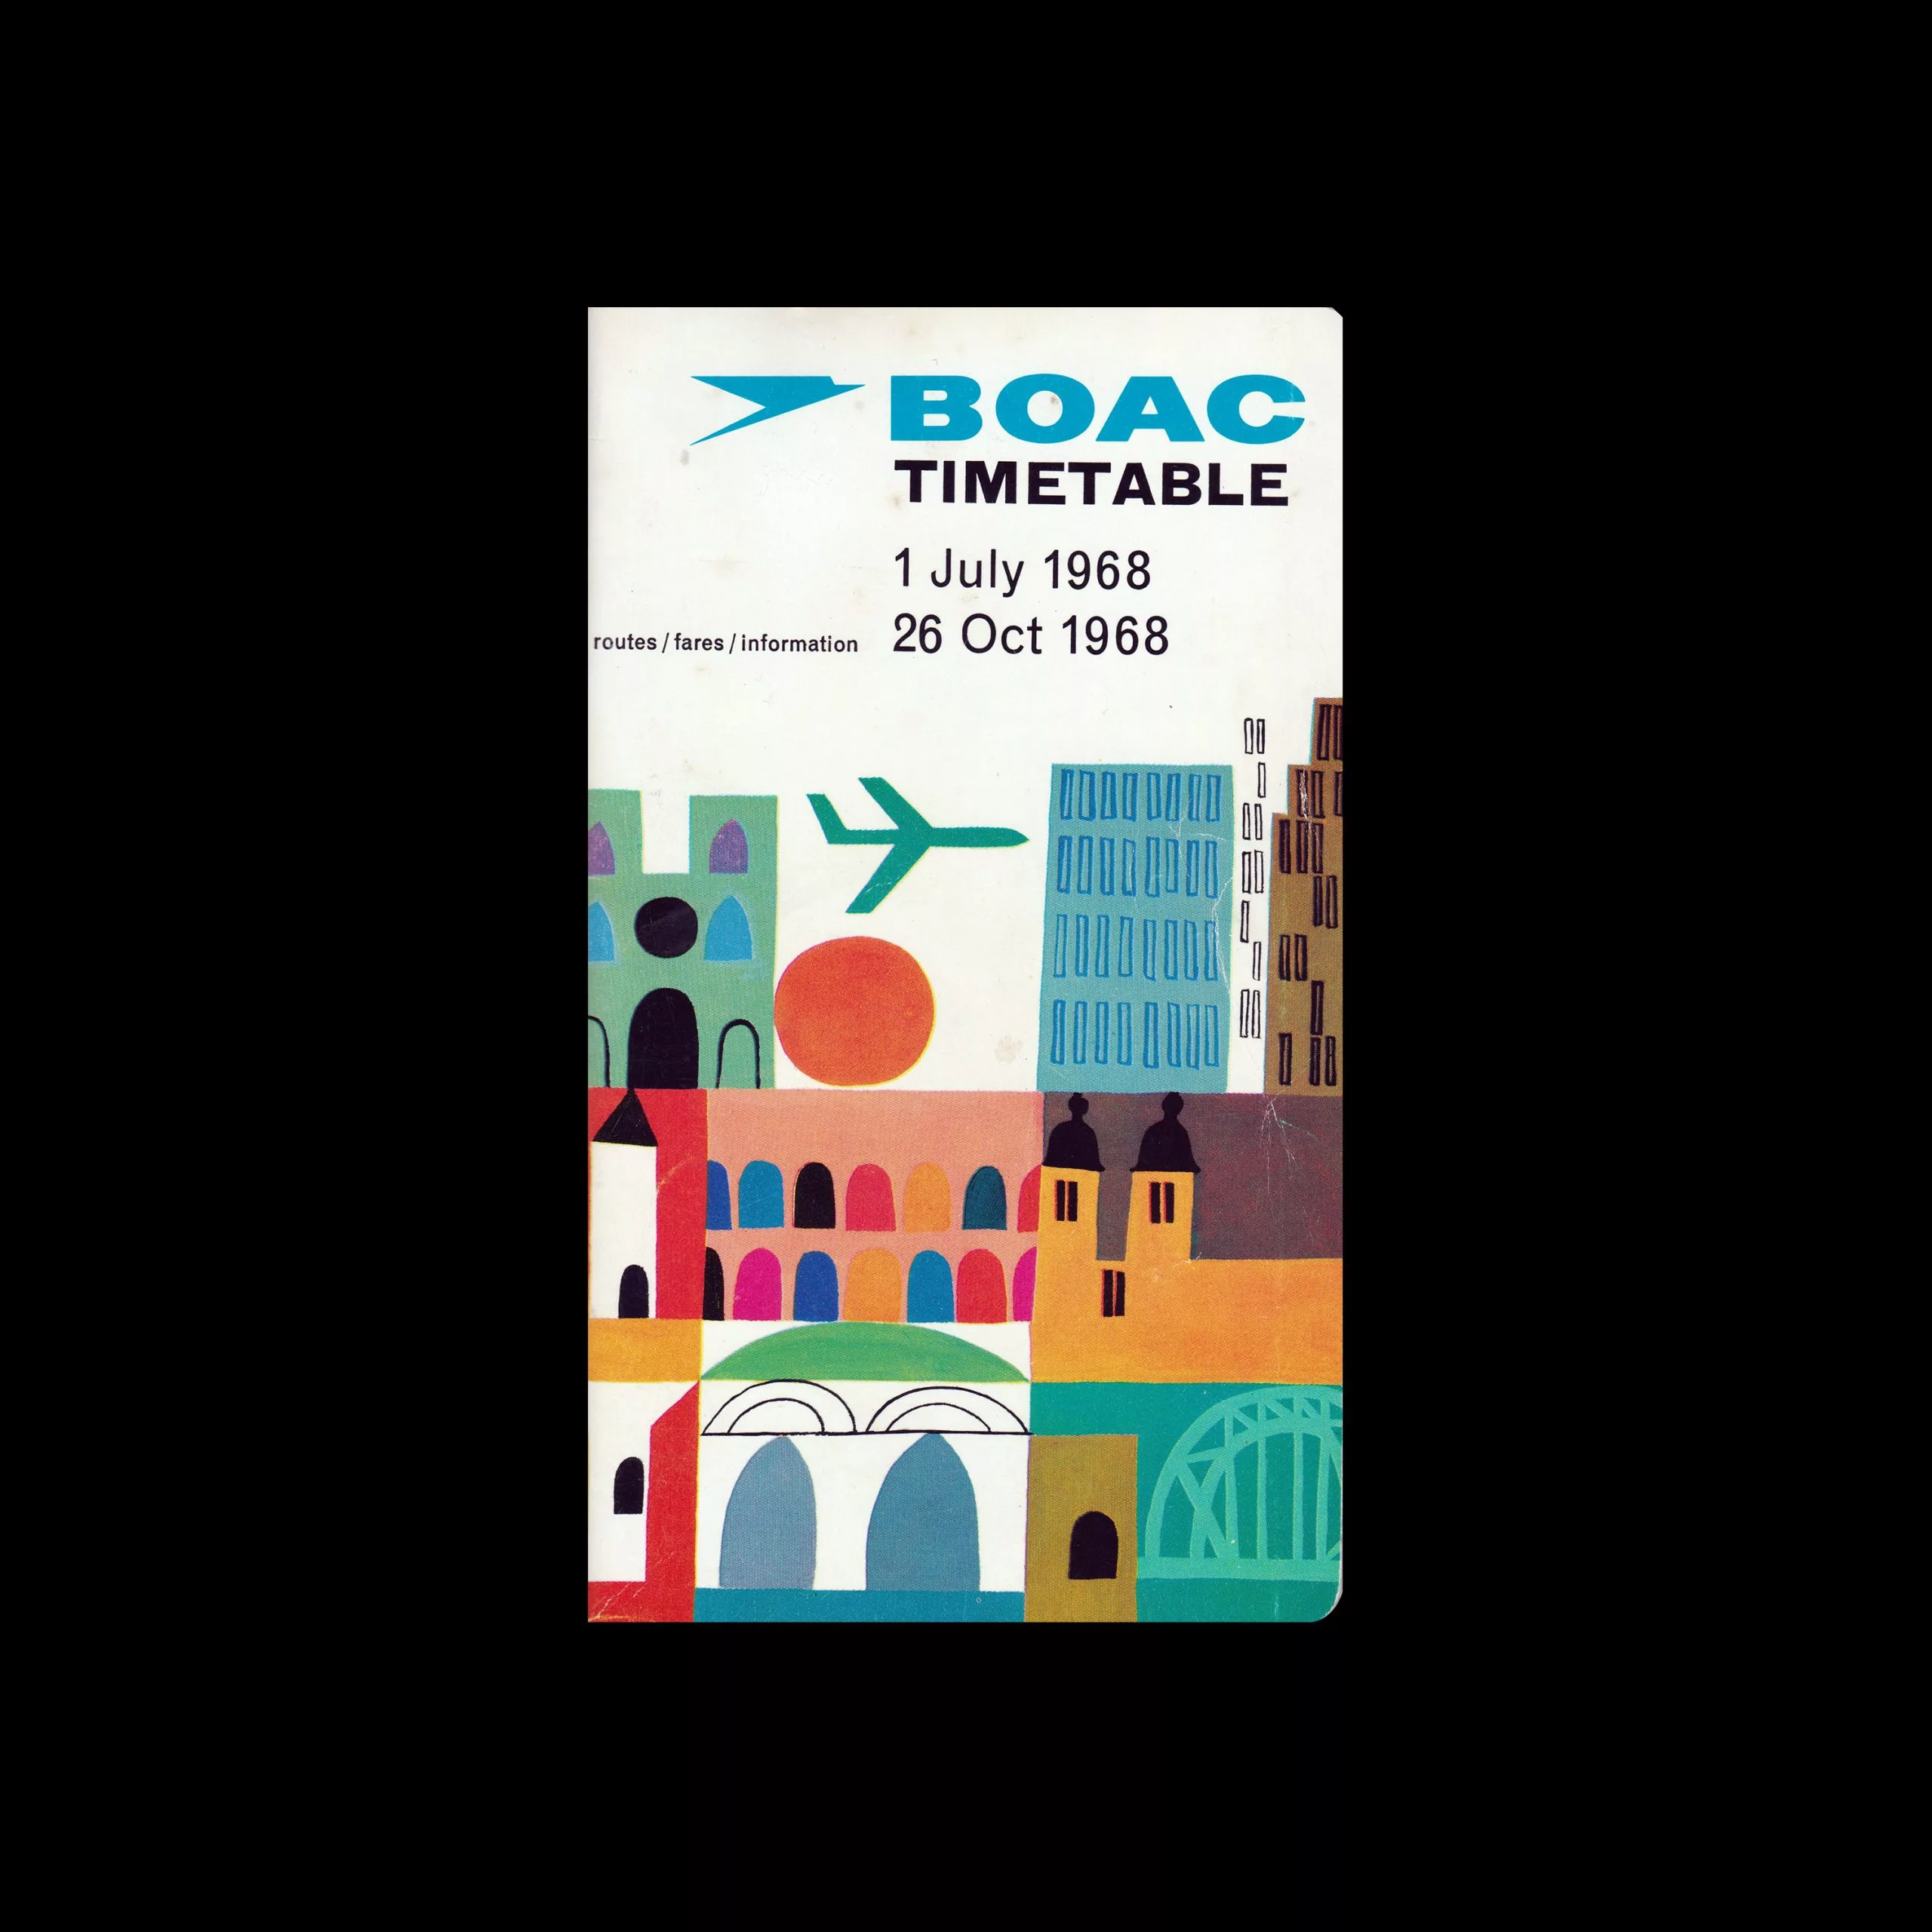 BOAC Timetable 1968